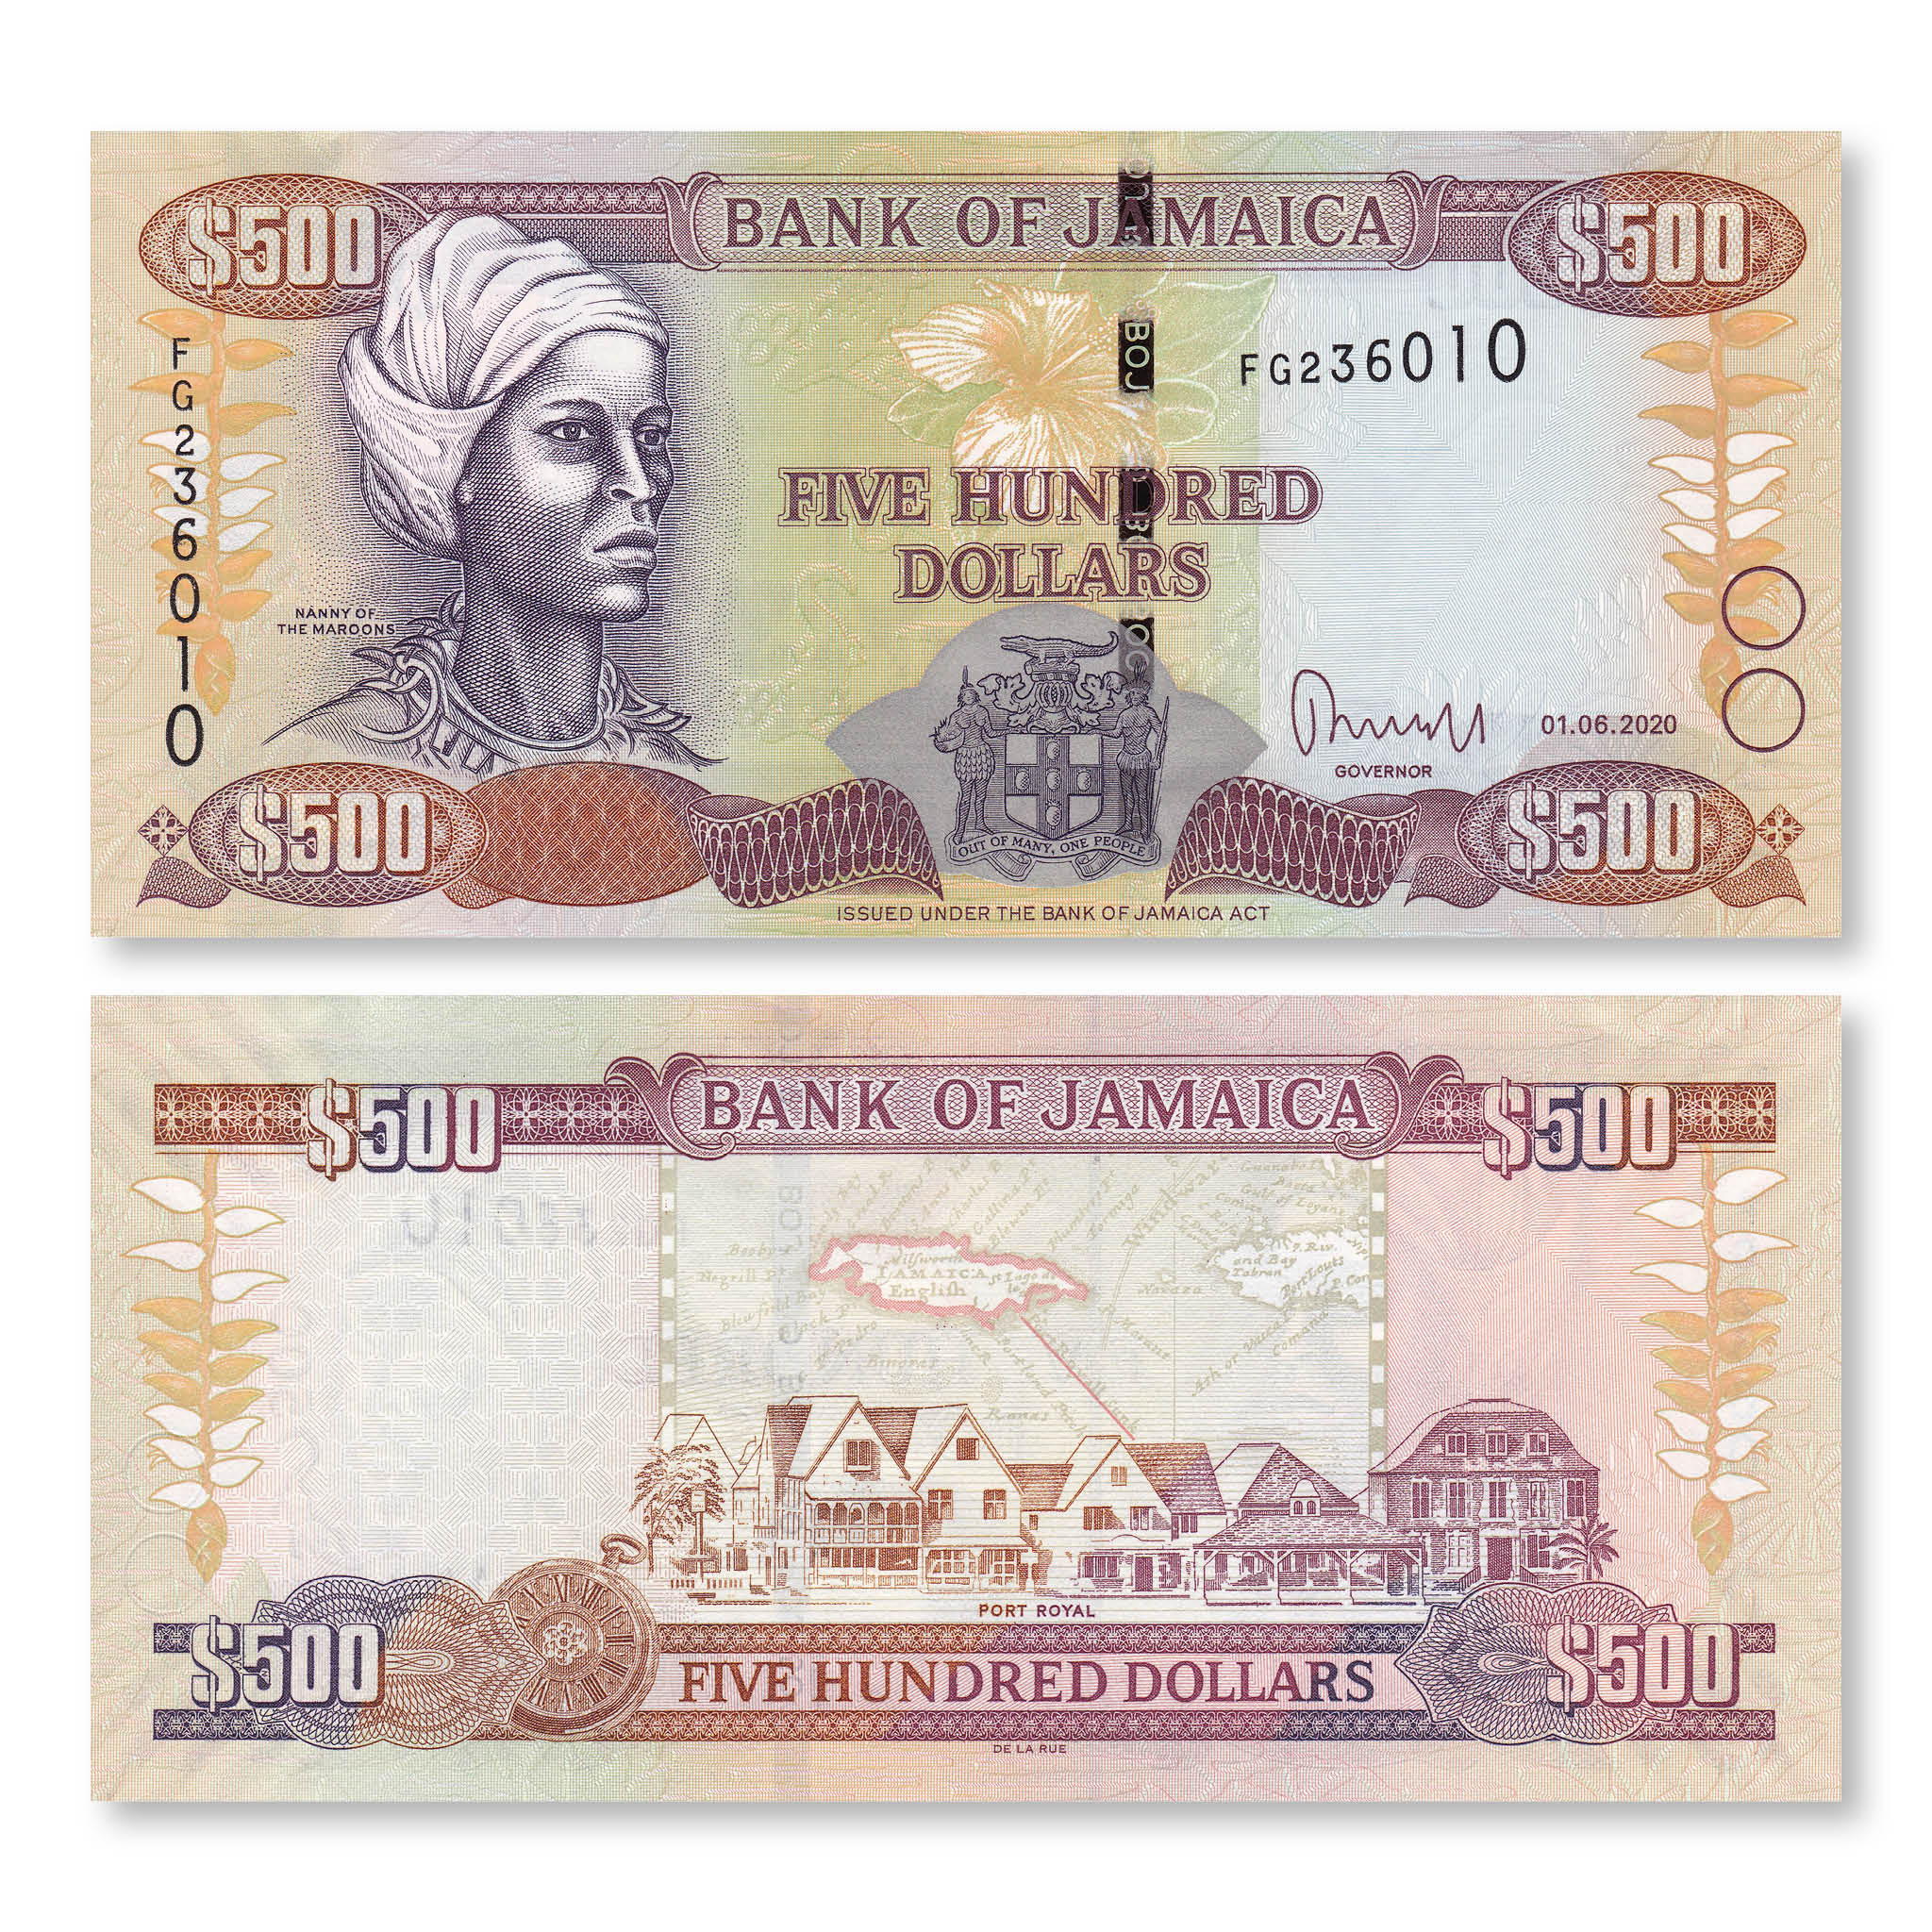 Jamaica 500 Dollars, 2020, B240l, P85, UNC - Robert's World Money - World Banknotes